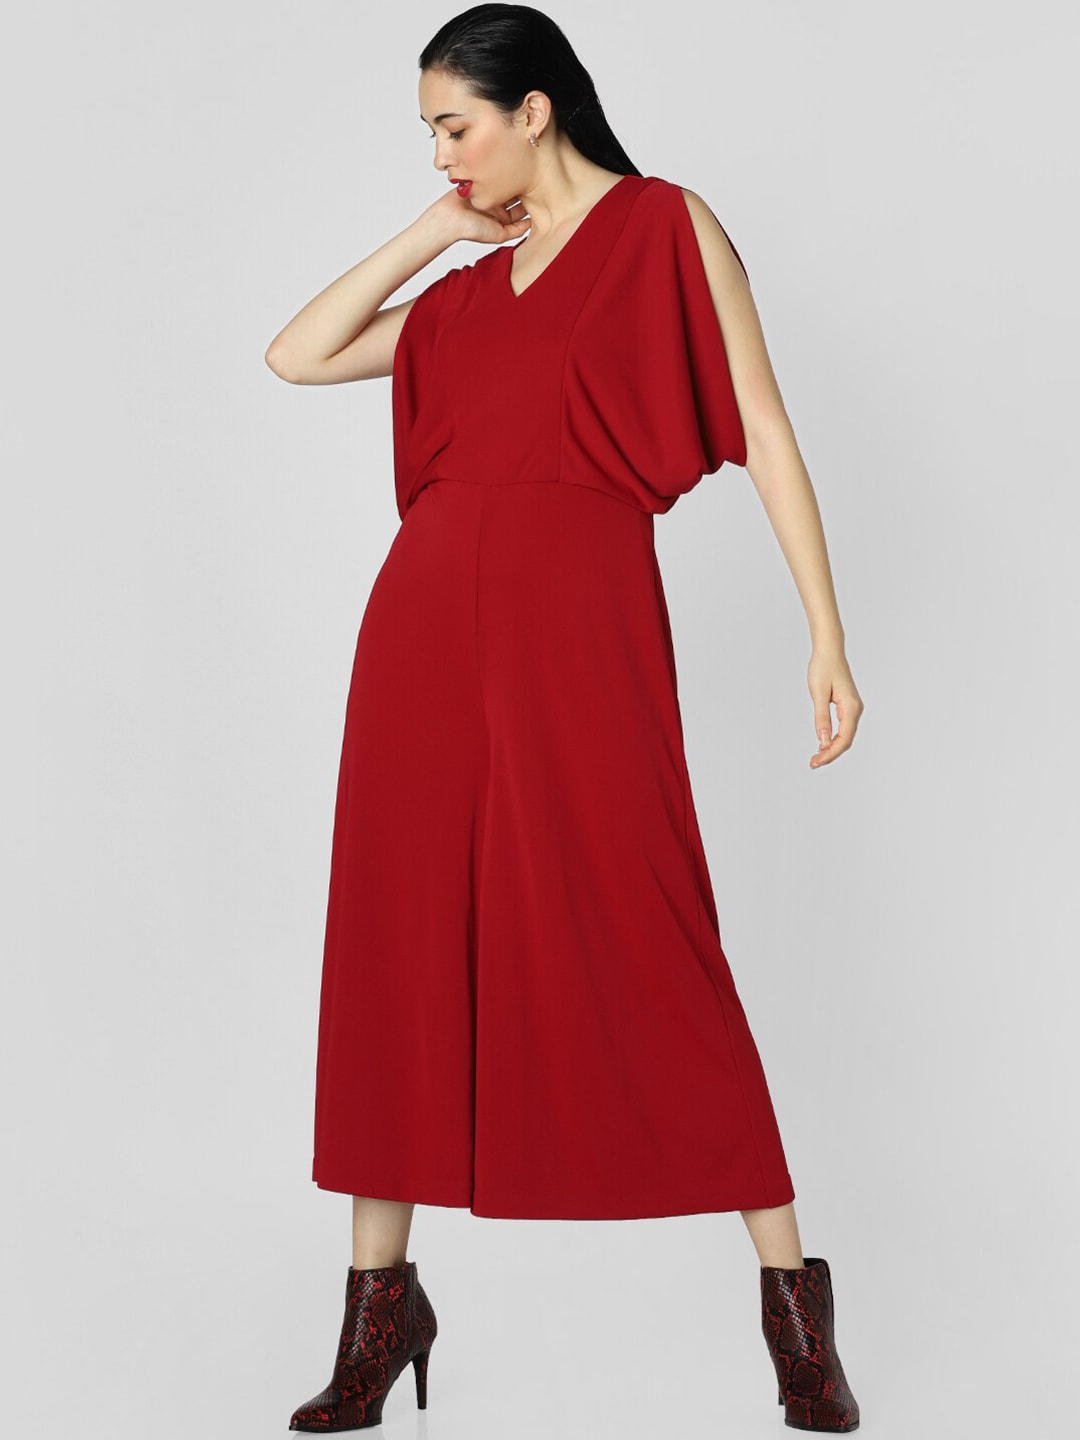 Vero Moda Red Culotte Jumpsuit Price in India